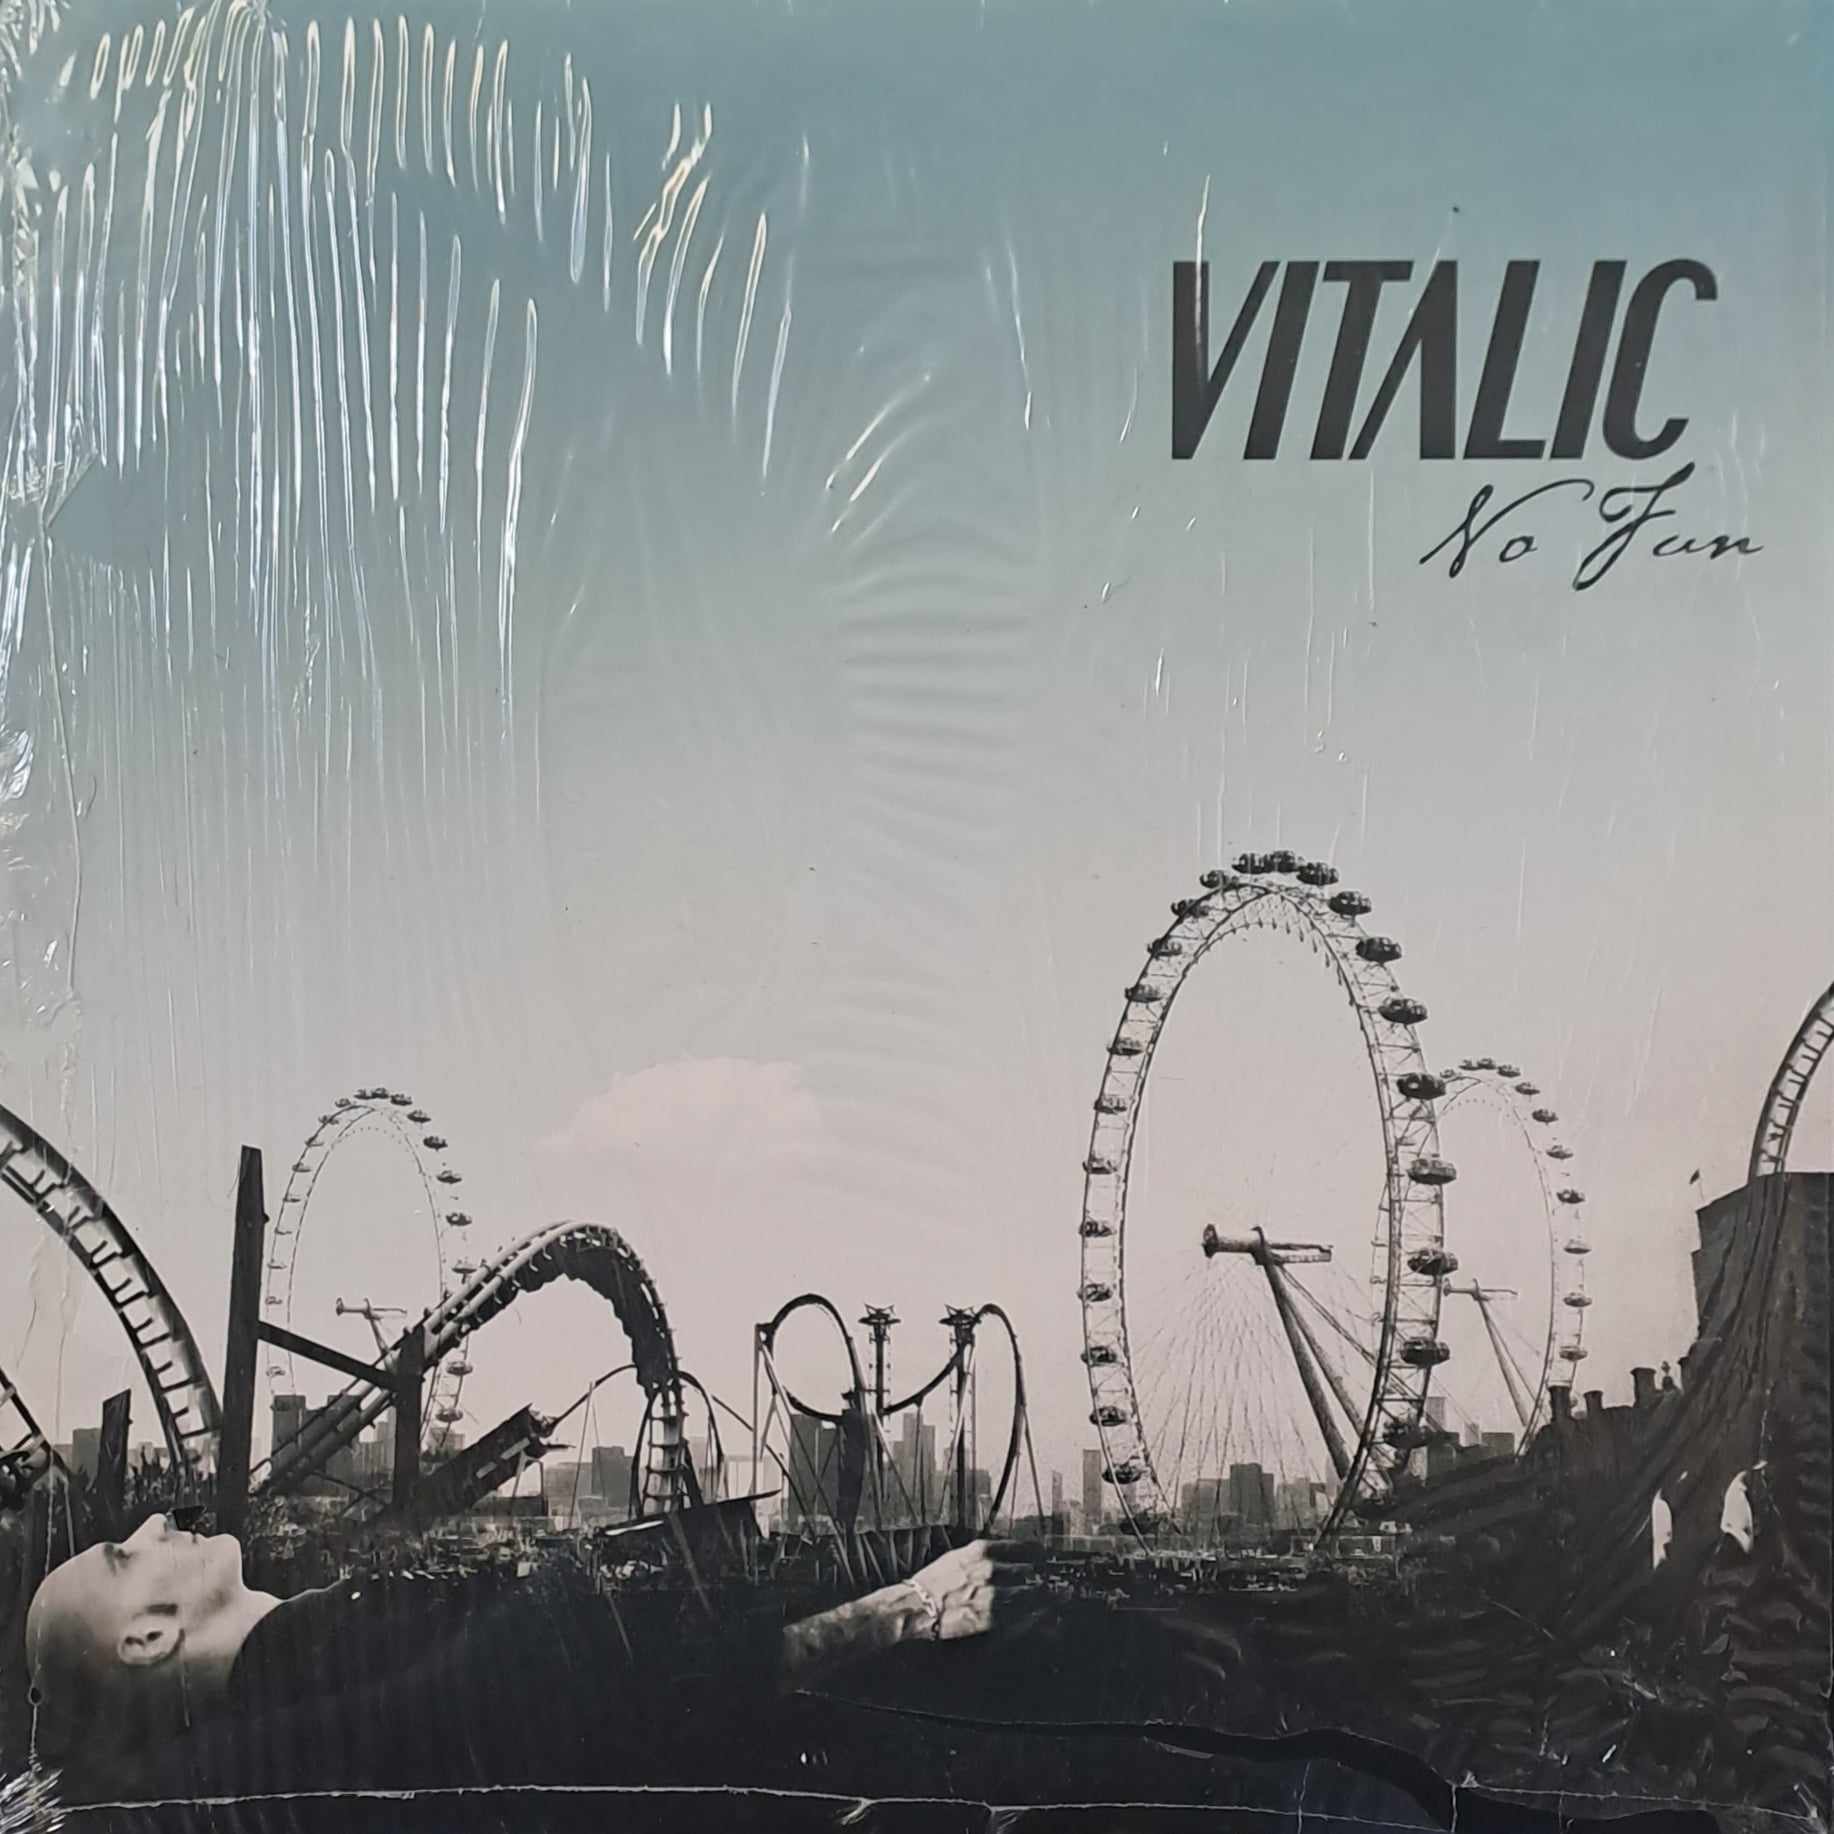 Vitalic (No Fun) - vinyle electro